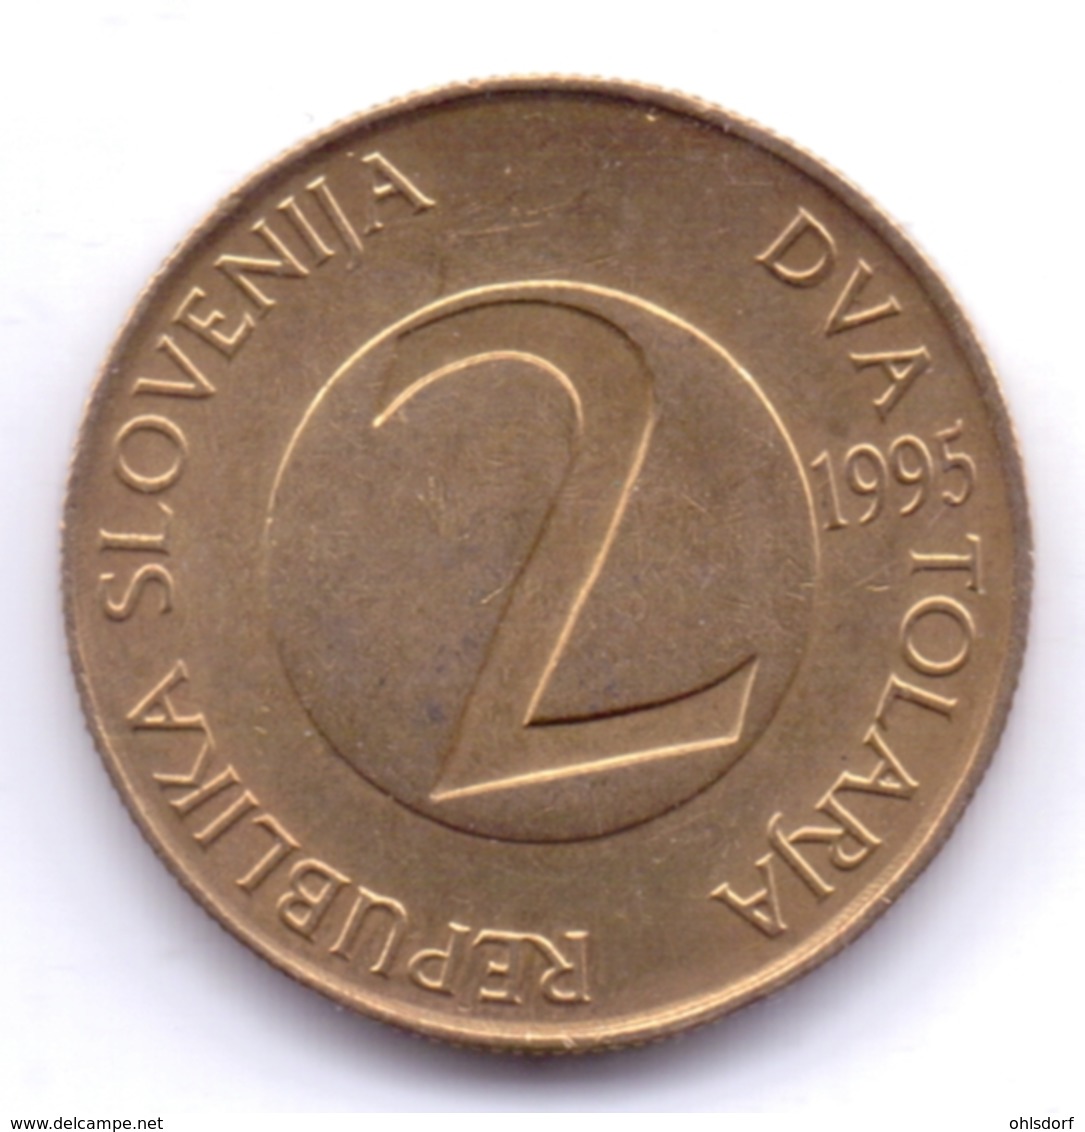 SLOVENIA 1995: 2 Tolarja, KM 5 - Slowenien